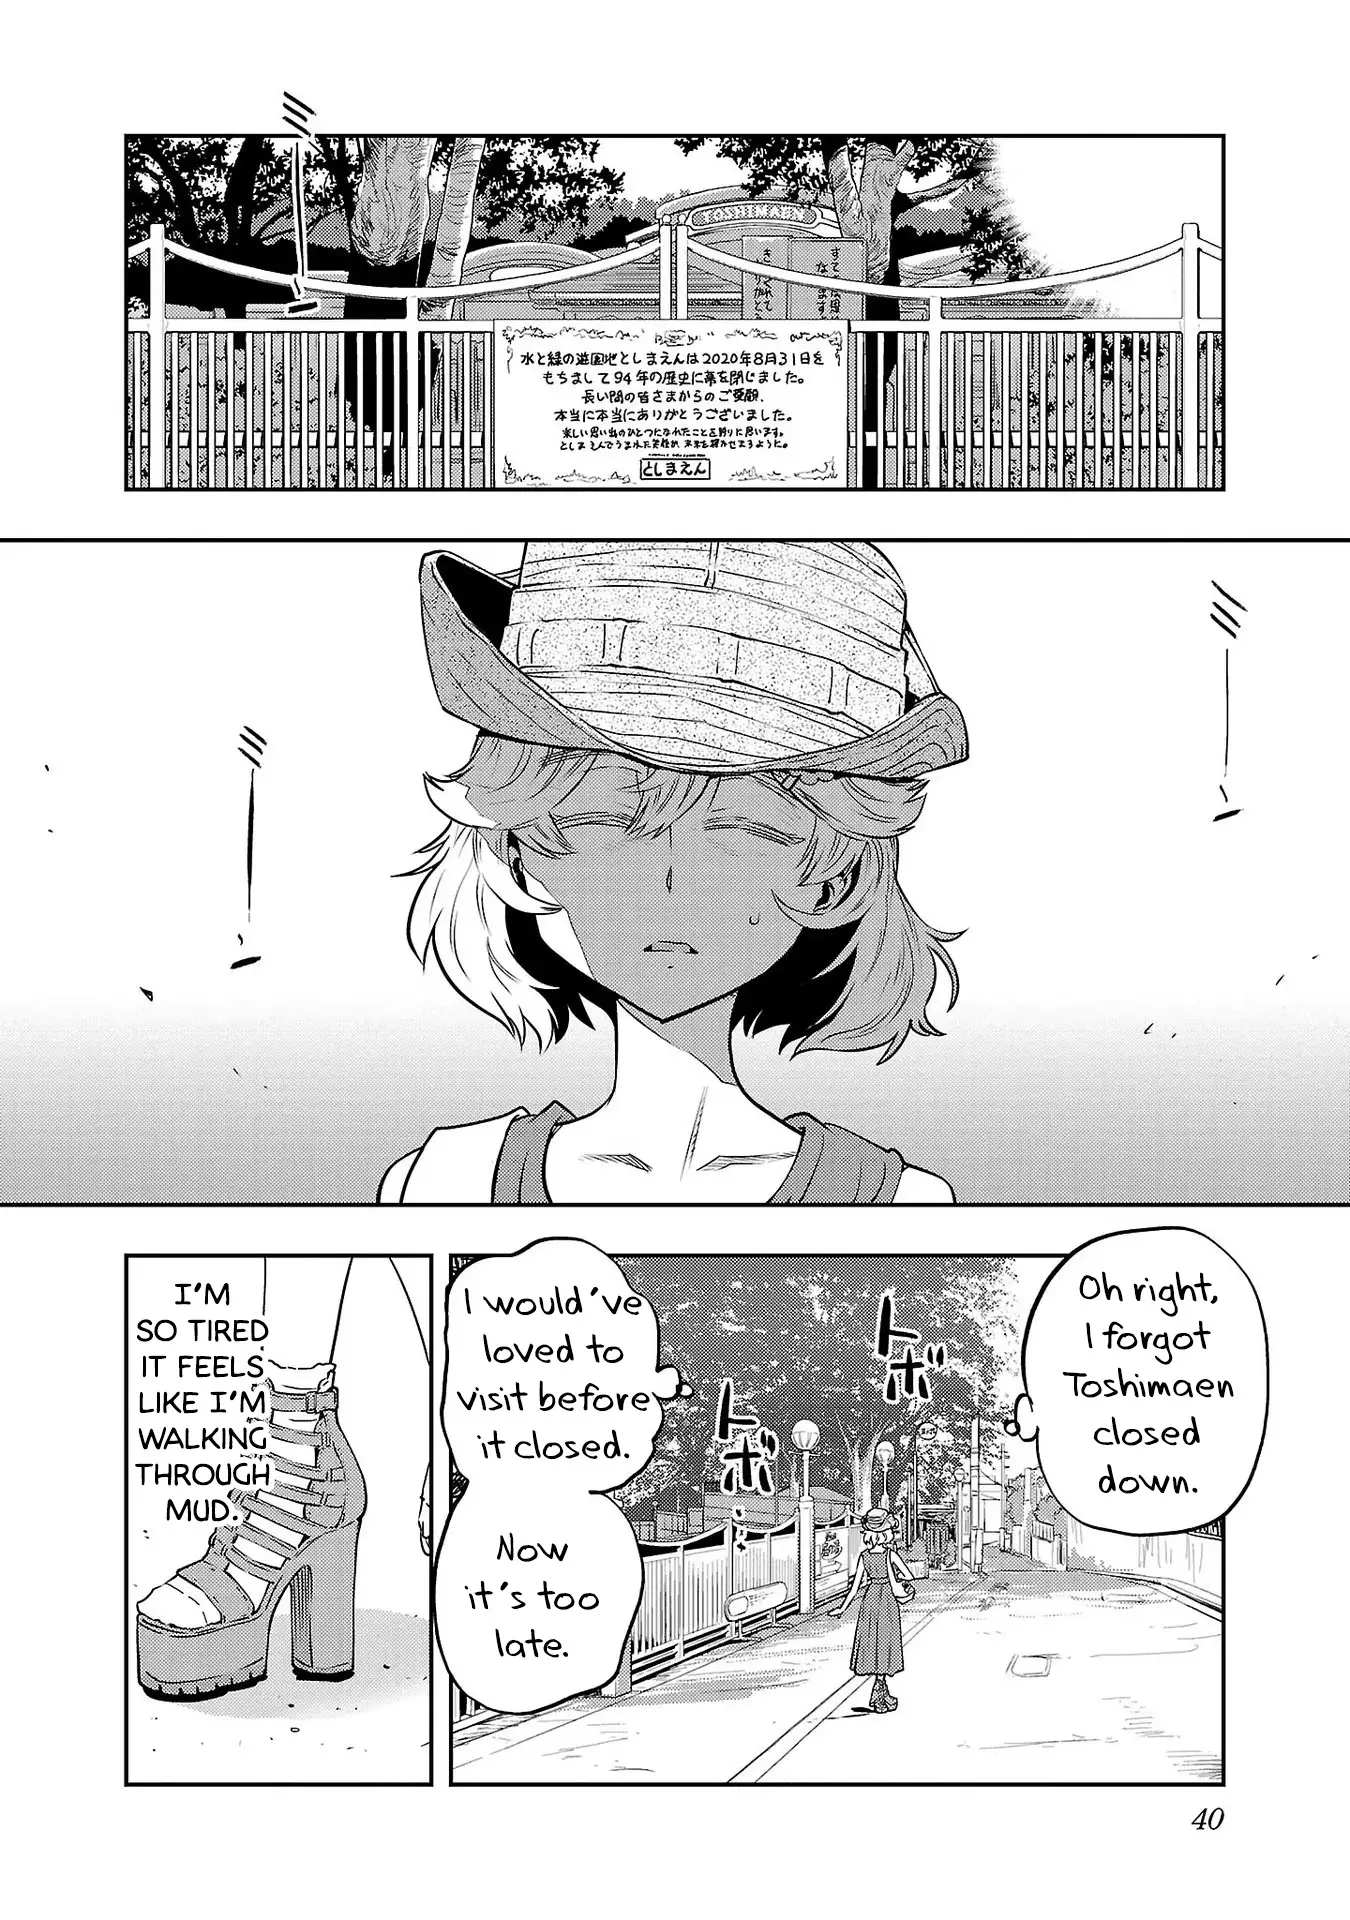 Haruka Reset - 11 page 2-0baf20f0